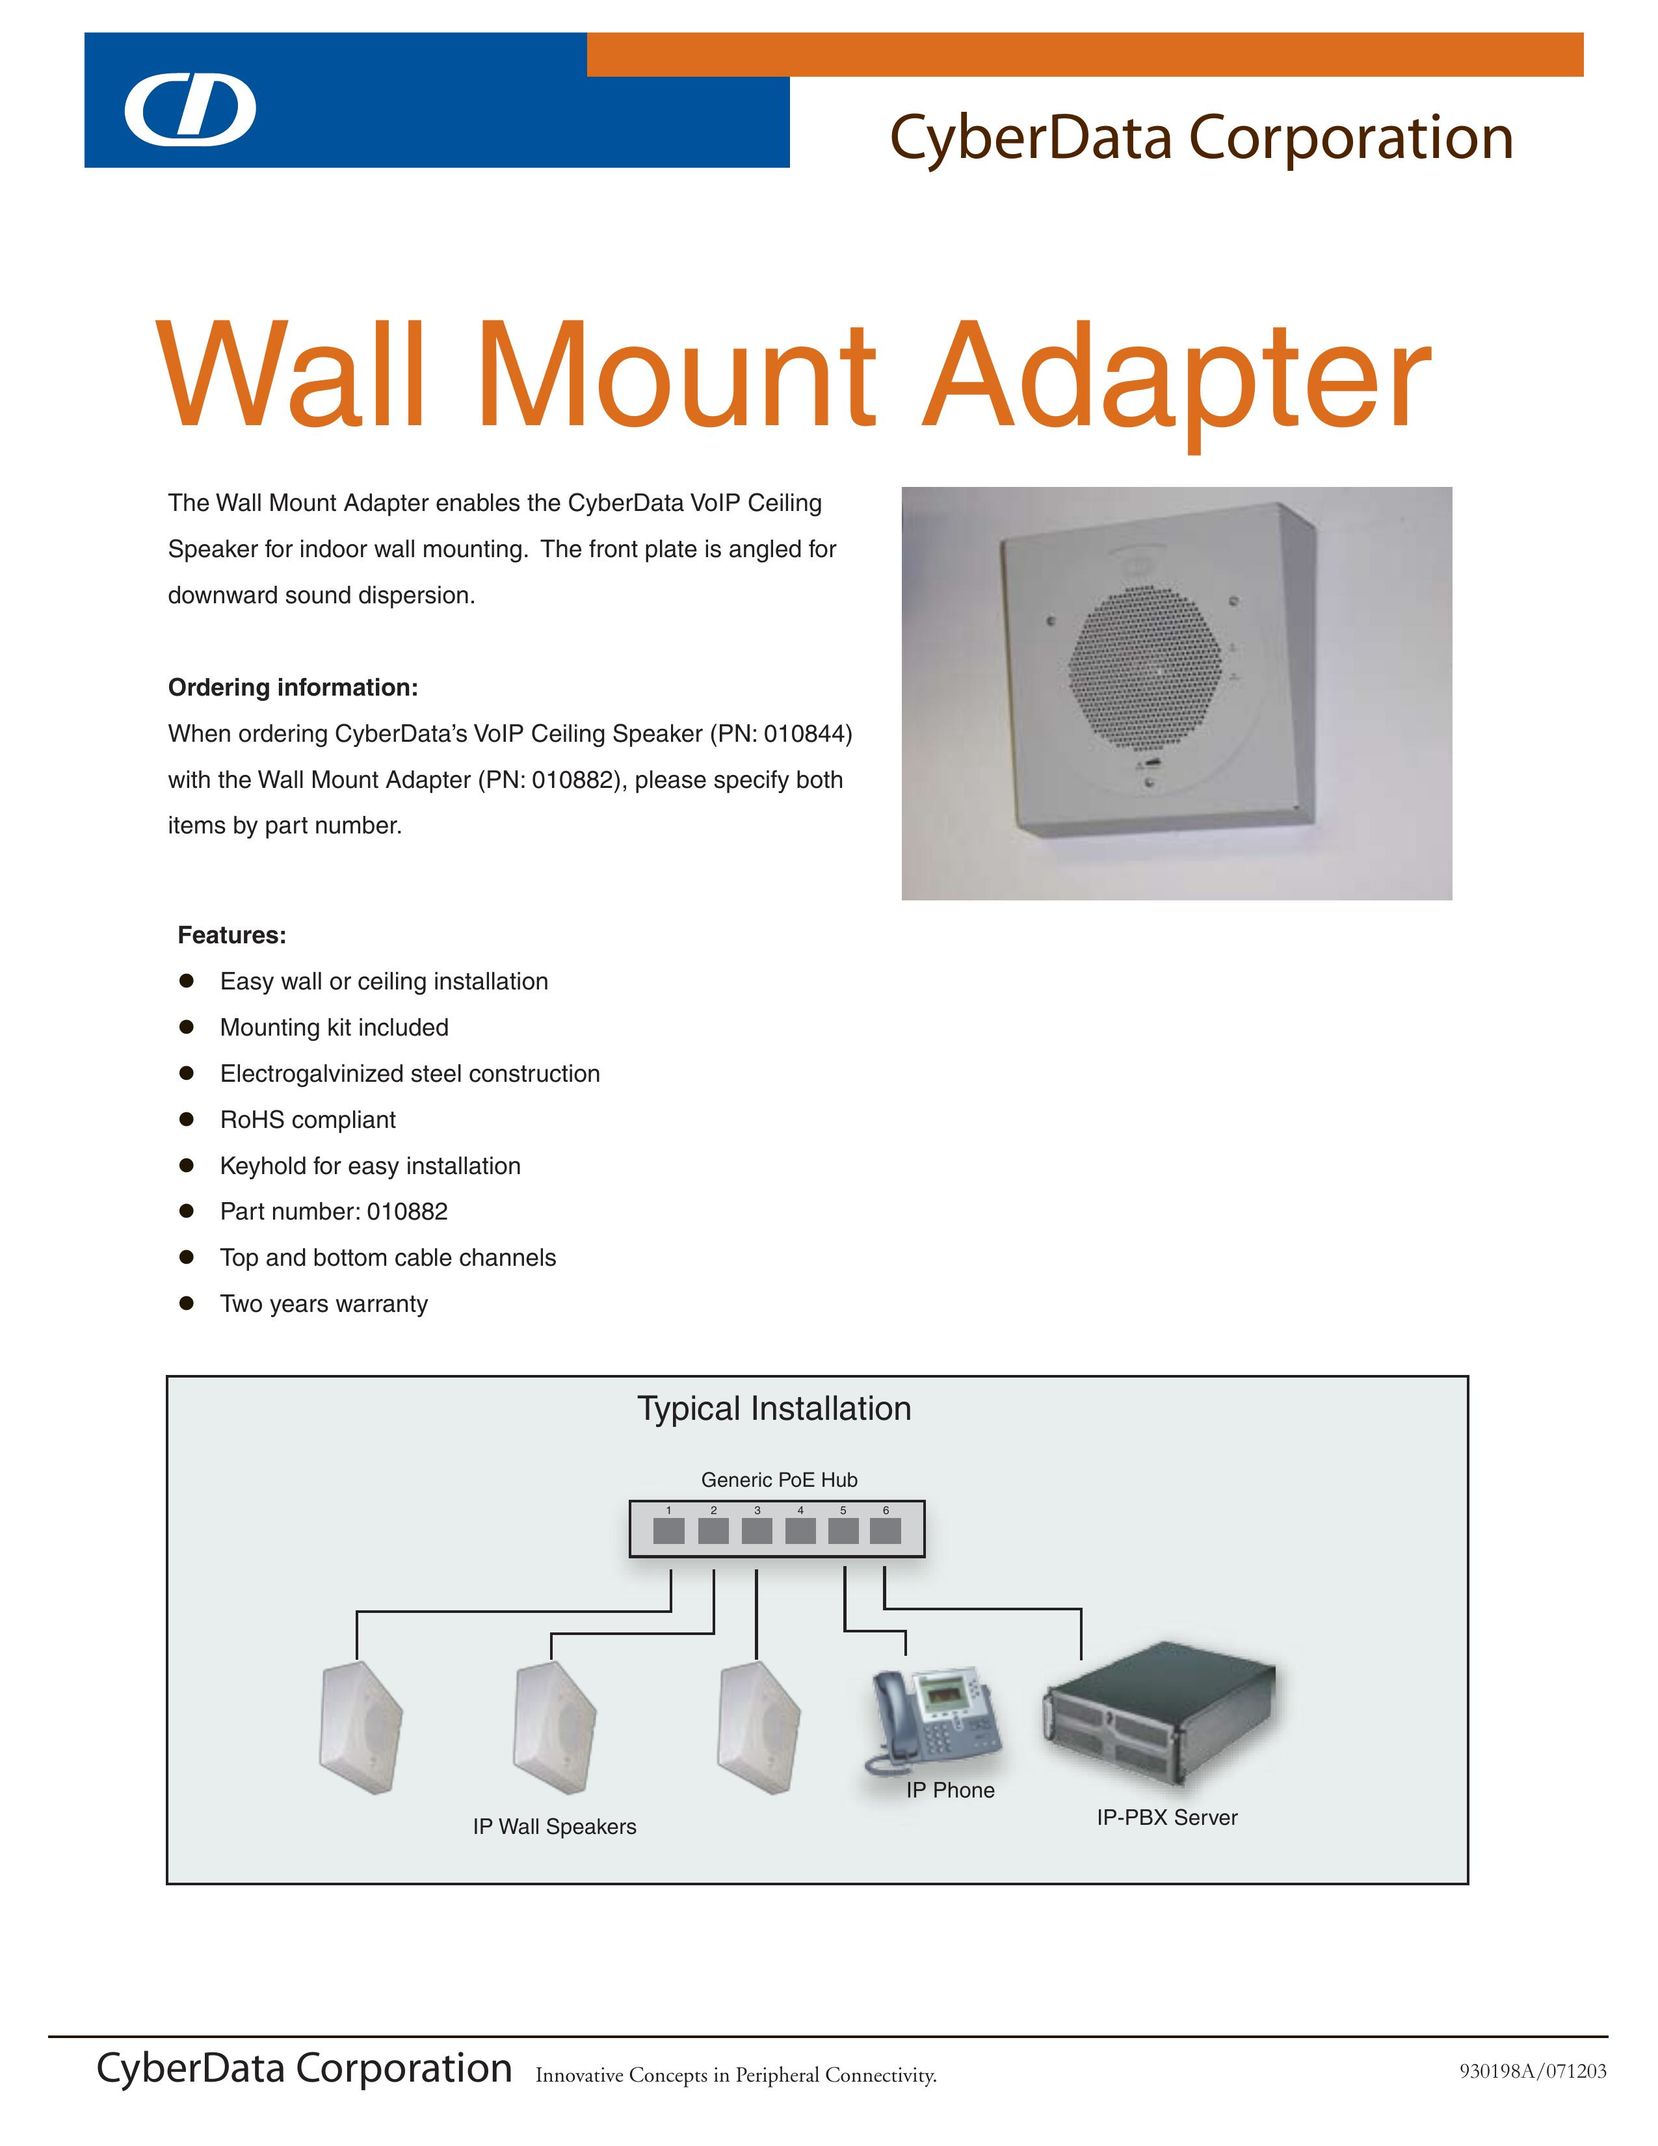 CyberData Wall Mount Adapter Network Card User Manual